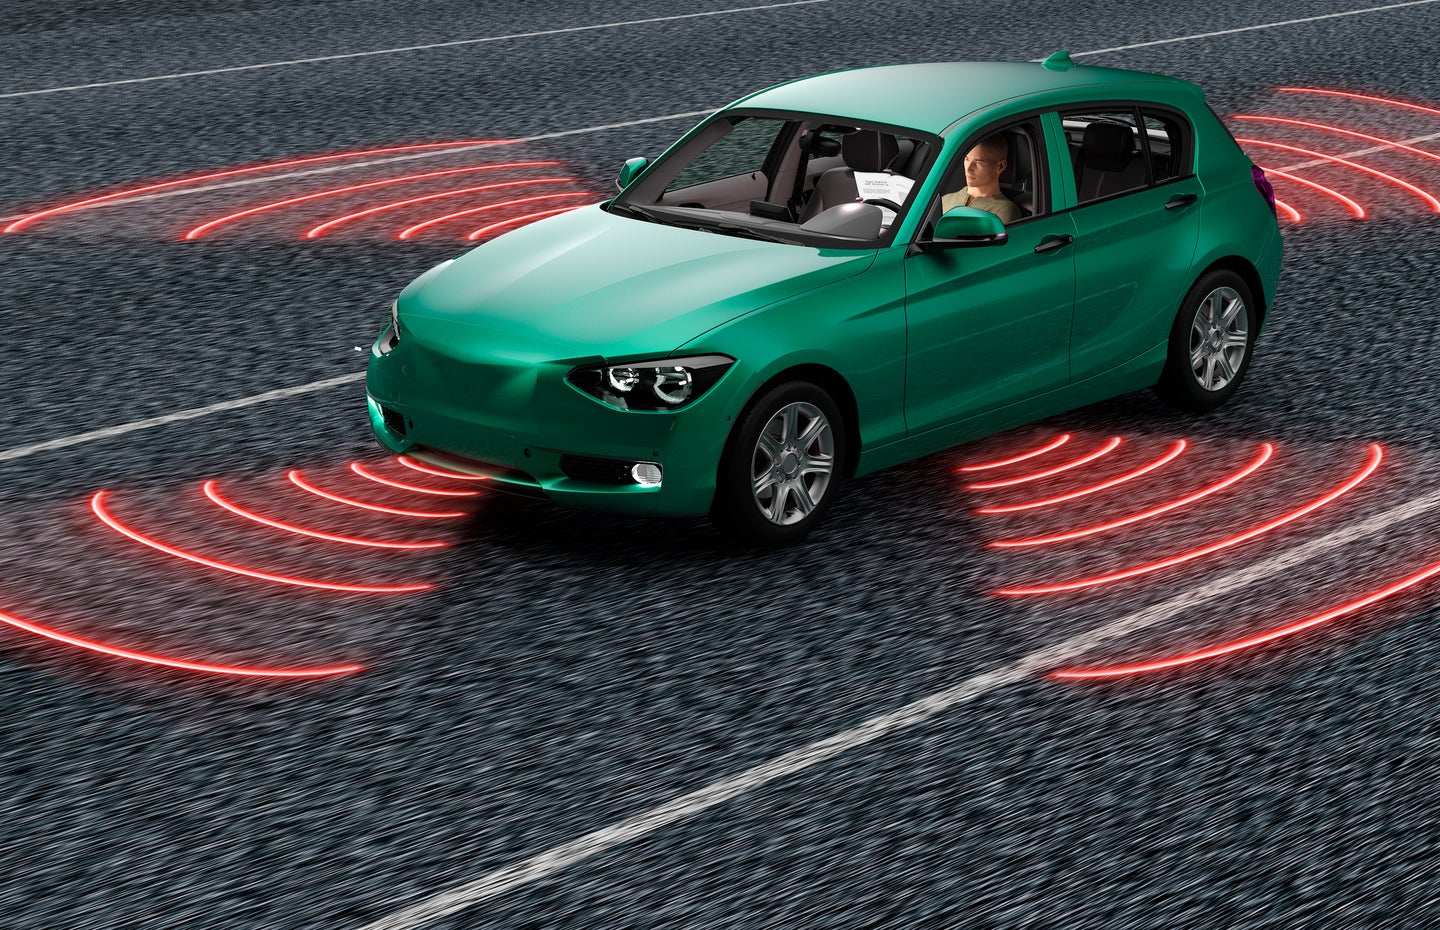 A mock self-driving car deploys its sensors on the road.